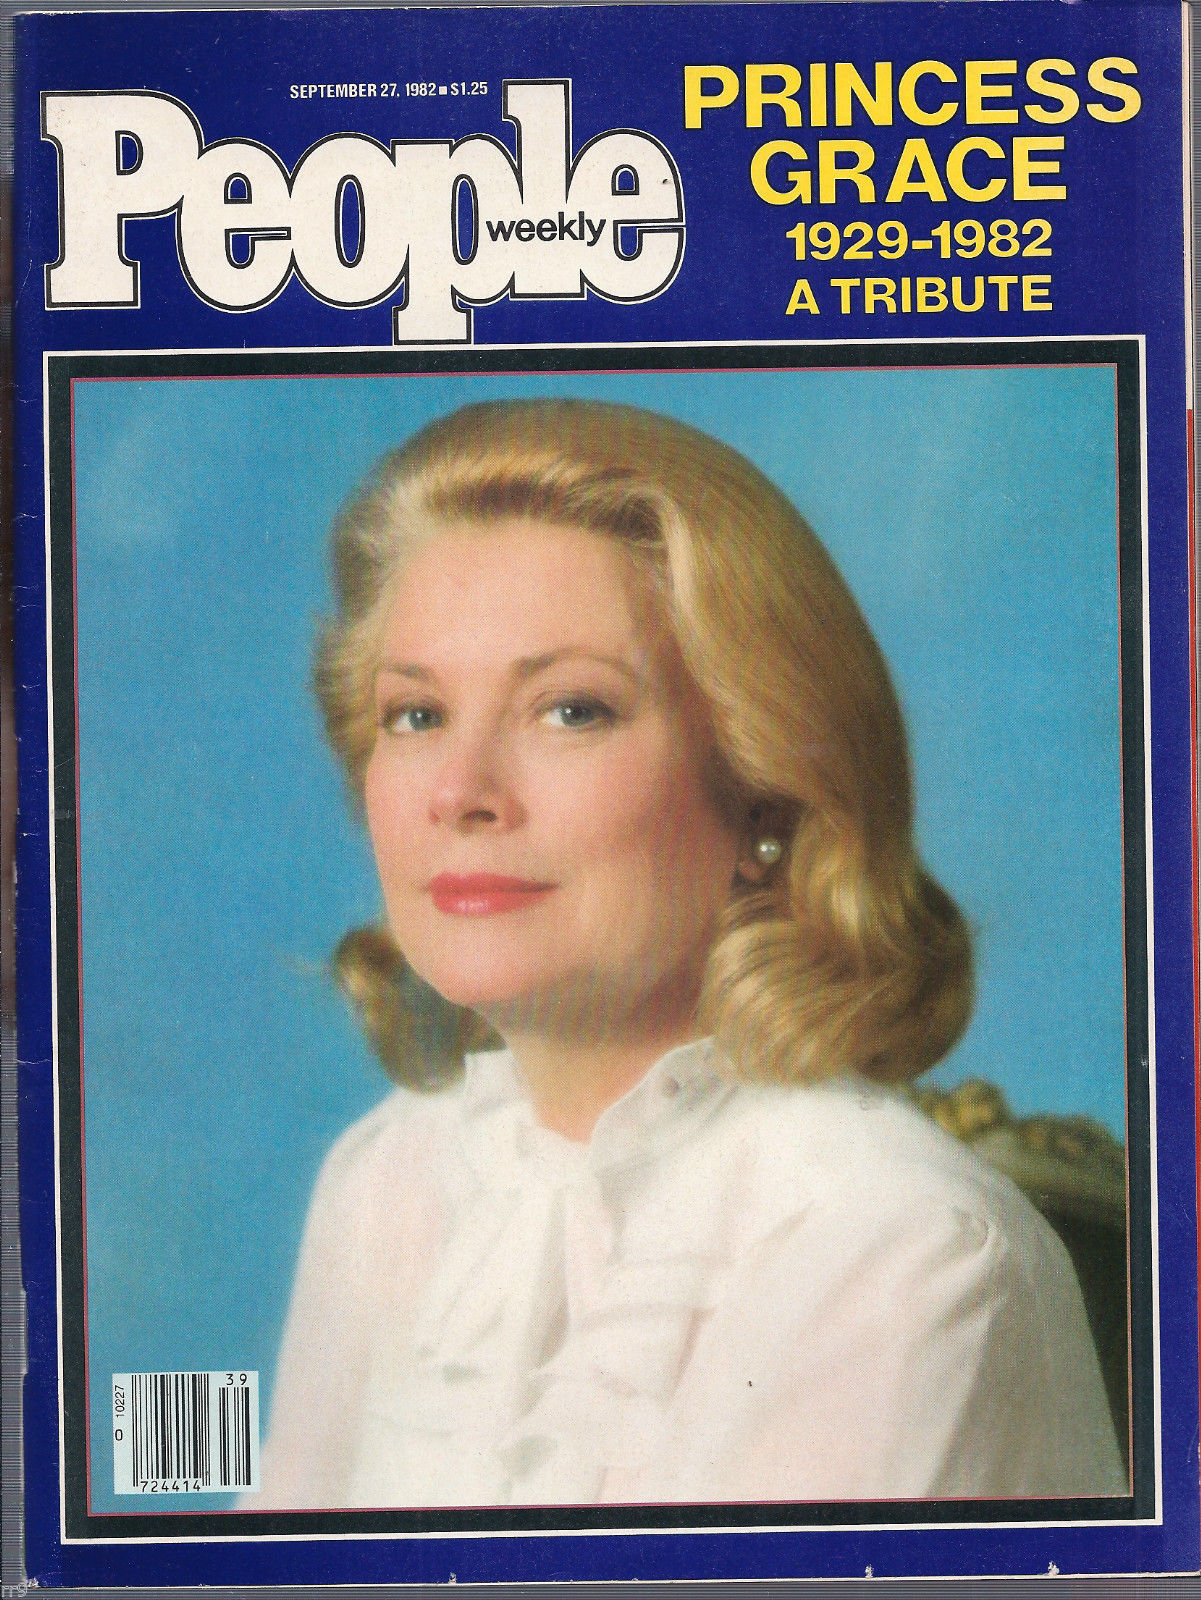 People Magazine September 27, 1982 Princess Grace Tribute - $1.75